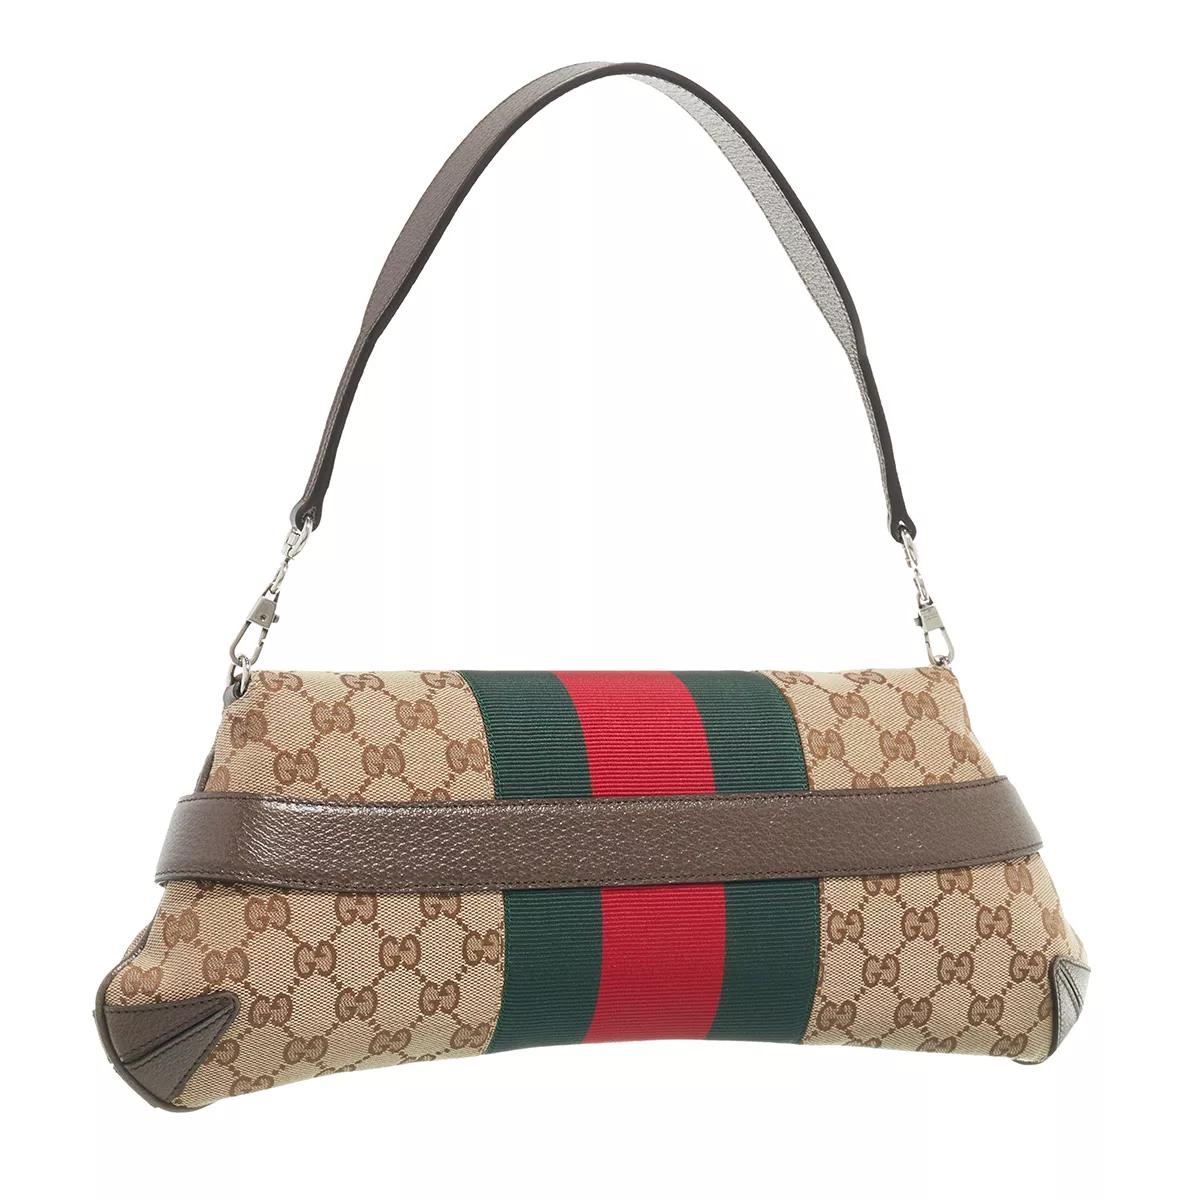 Gucci Hobo bags Horsebit Chain Medium Shoulder Bag in beige